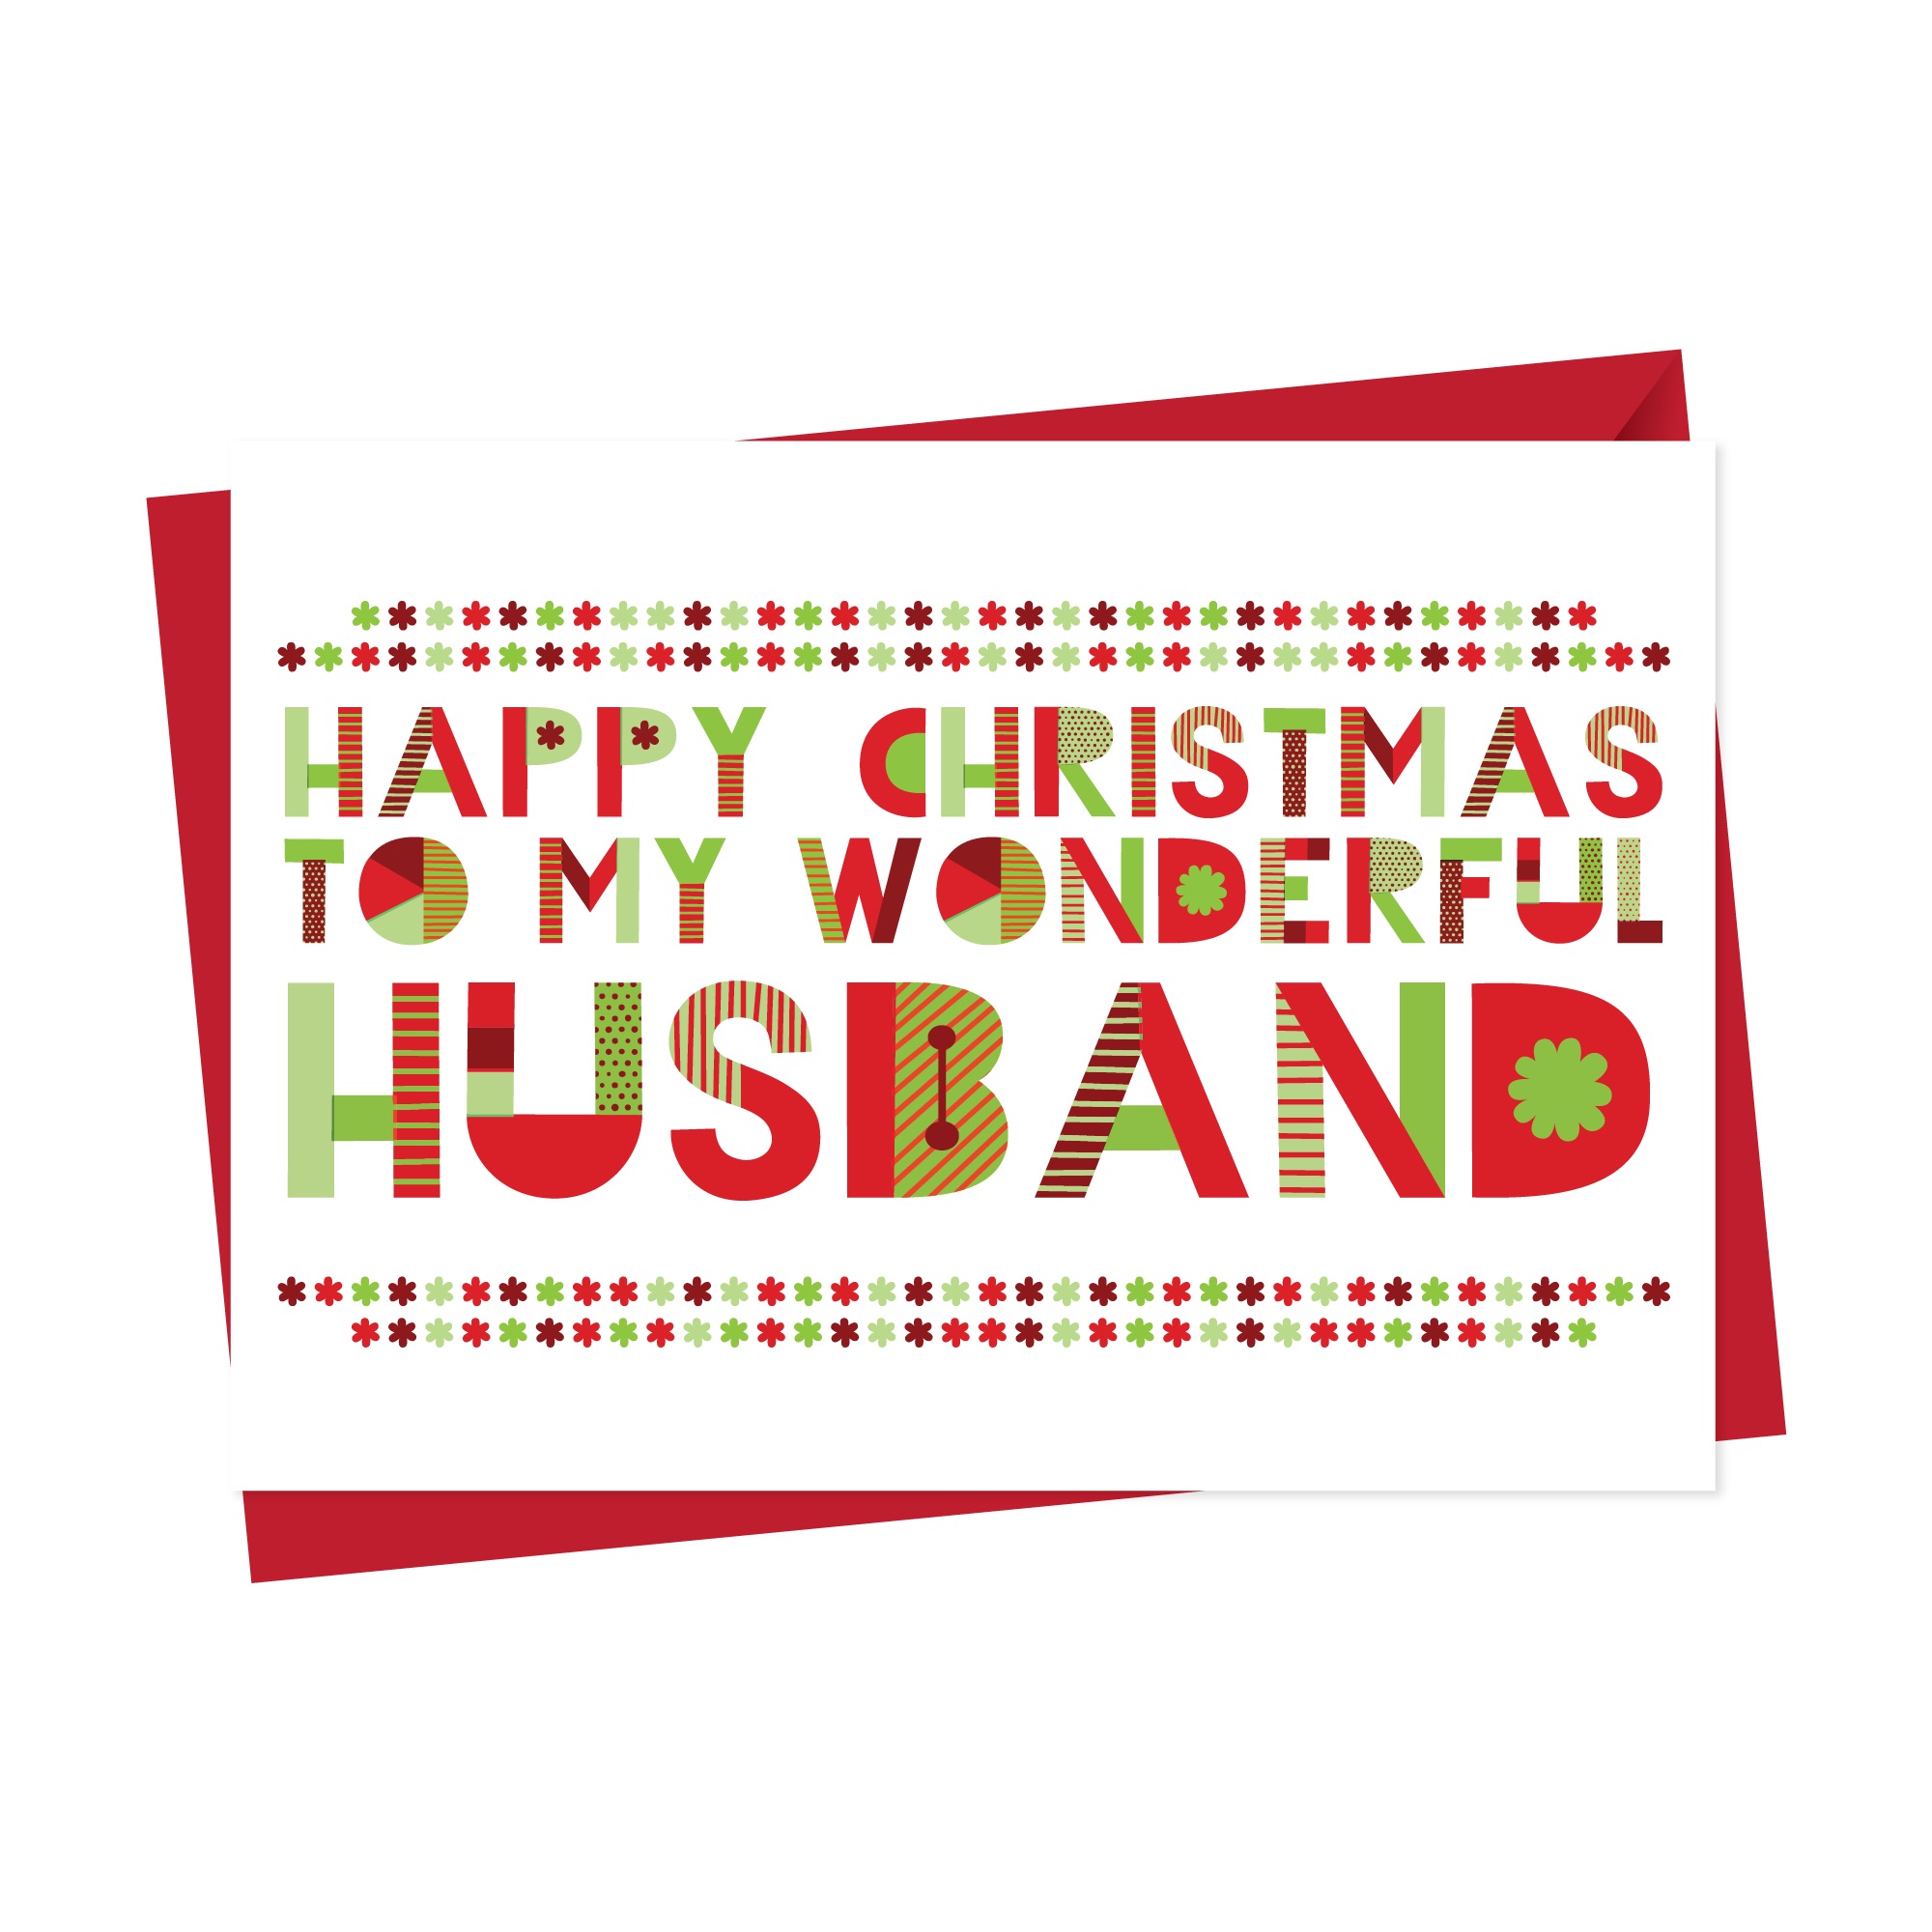 Wonderful Husband Christmas Card